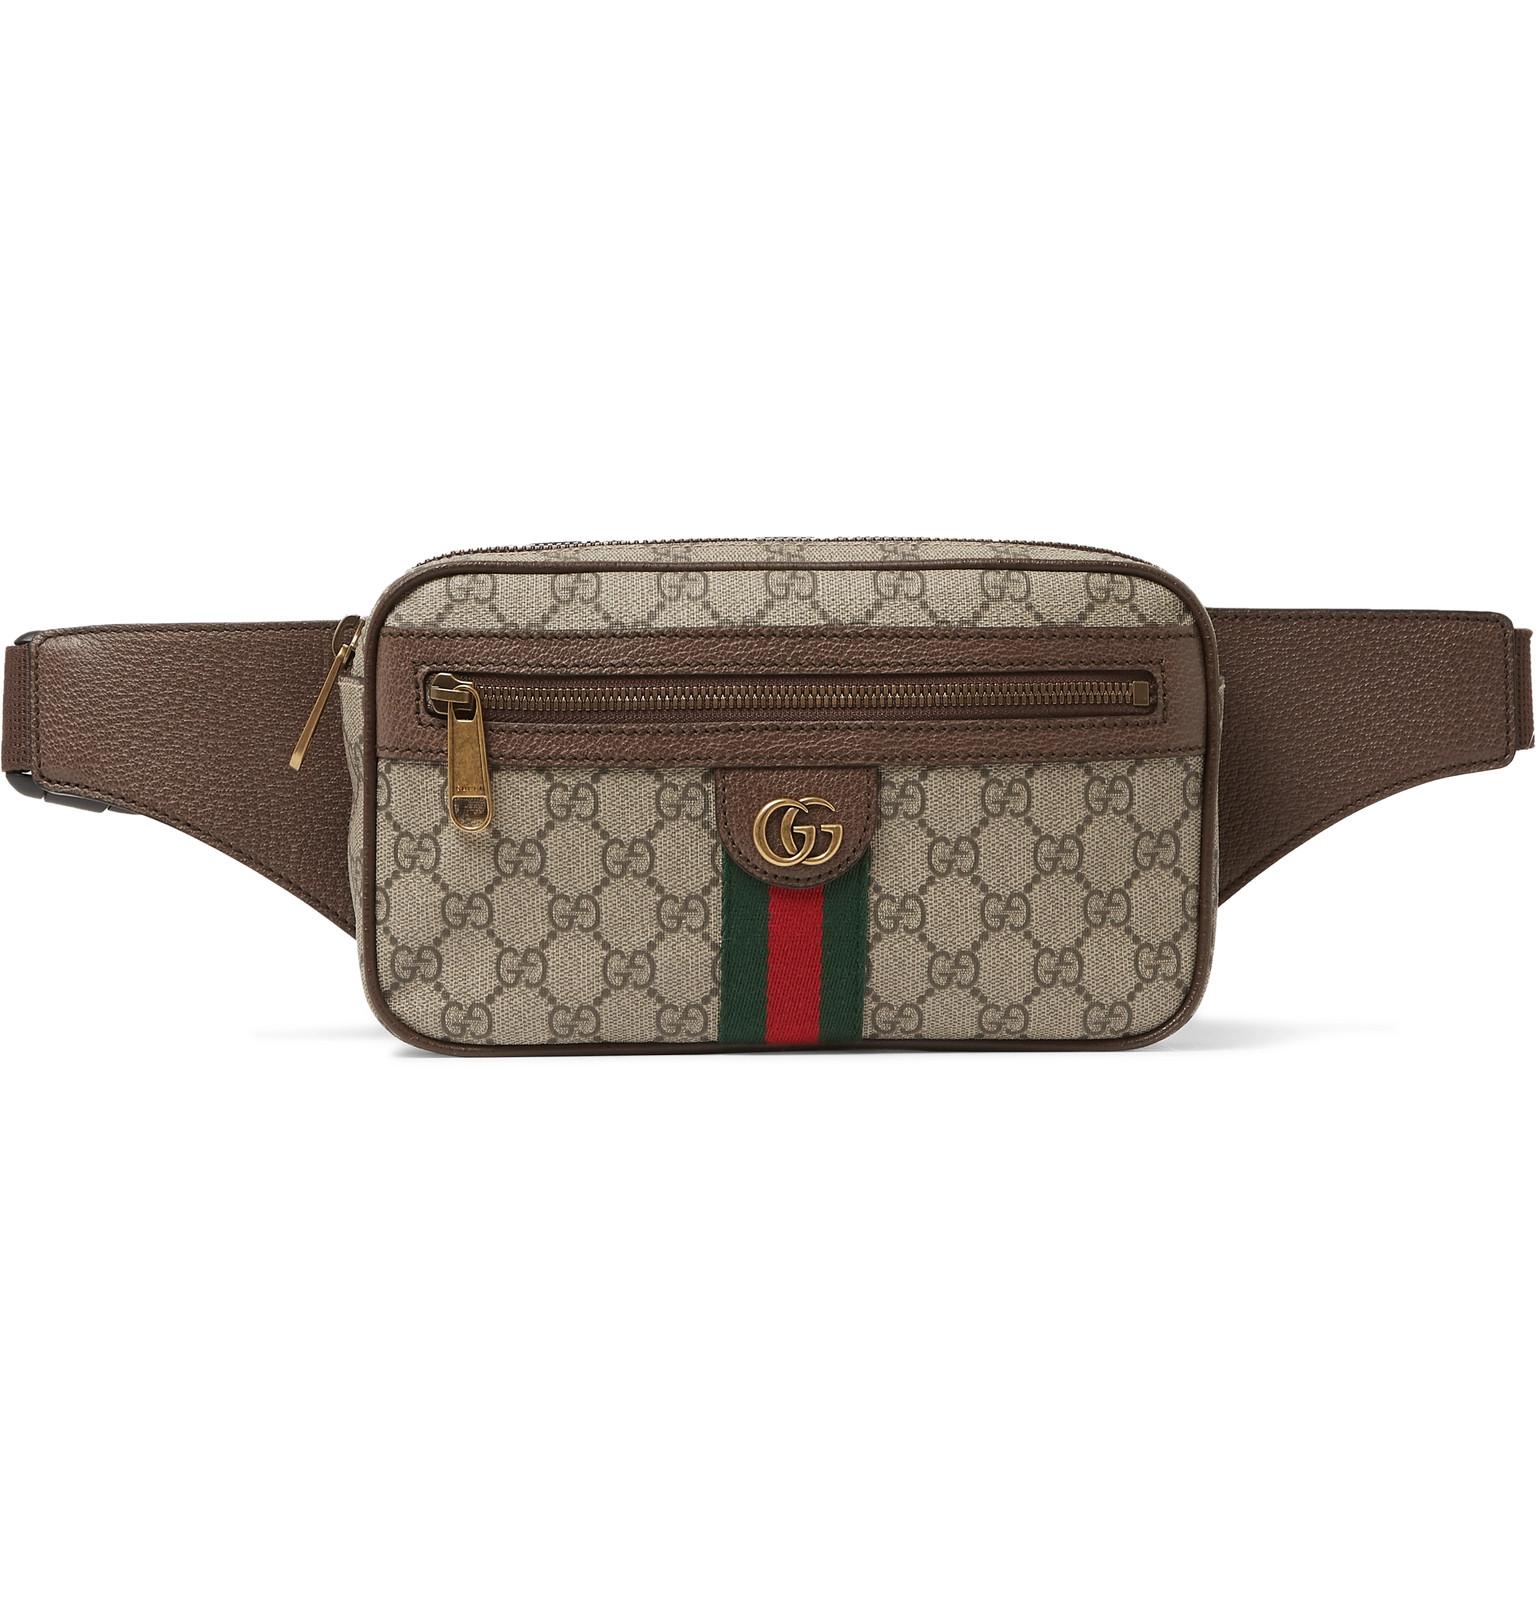 Gucci Leather-trimmed Monogrammed Coated-canvas Belt Bag in Natural for Men - Lyst